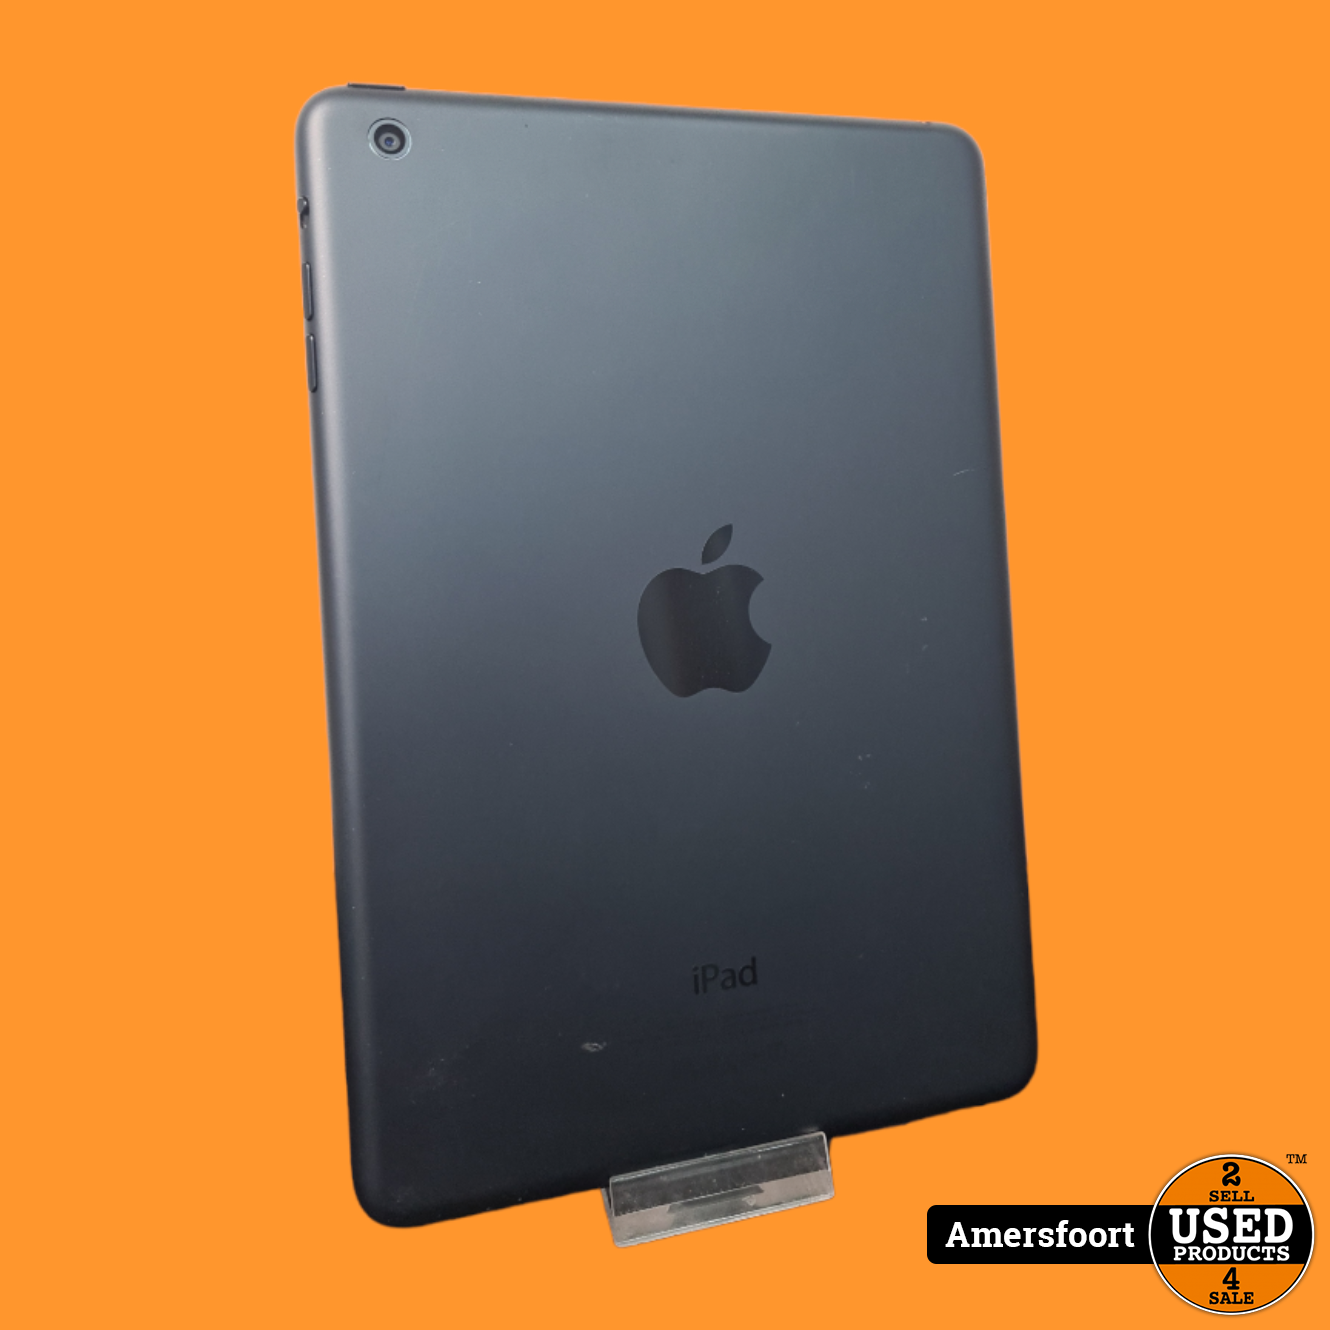 extreem produceren taxi Apple iPad Mini 16GB Wifi Zwart - Used Products Amersfoort